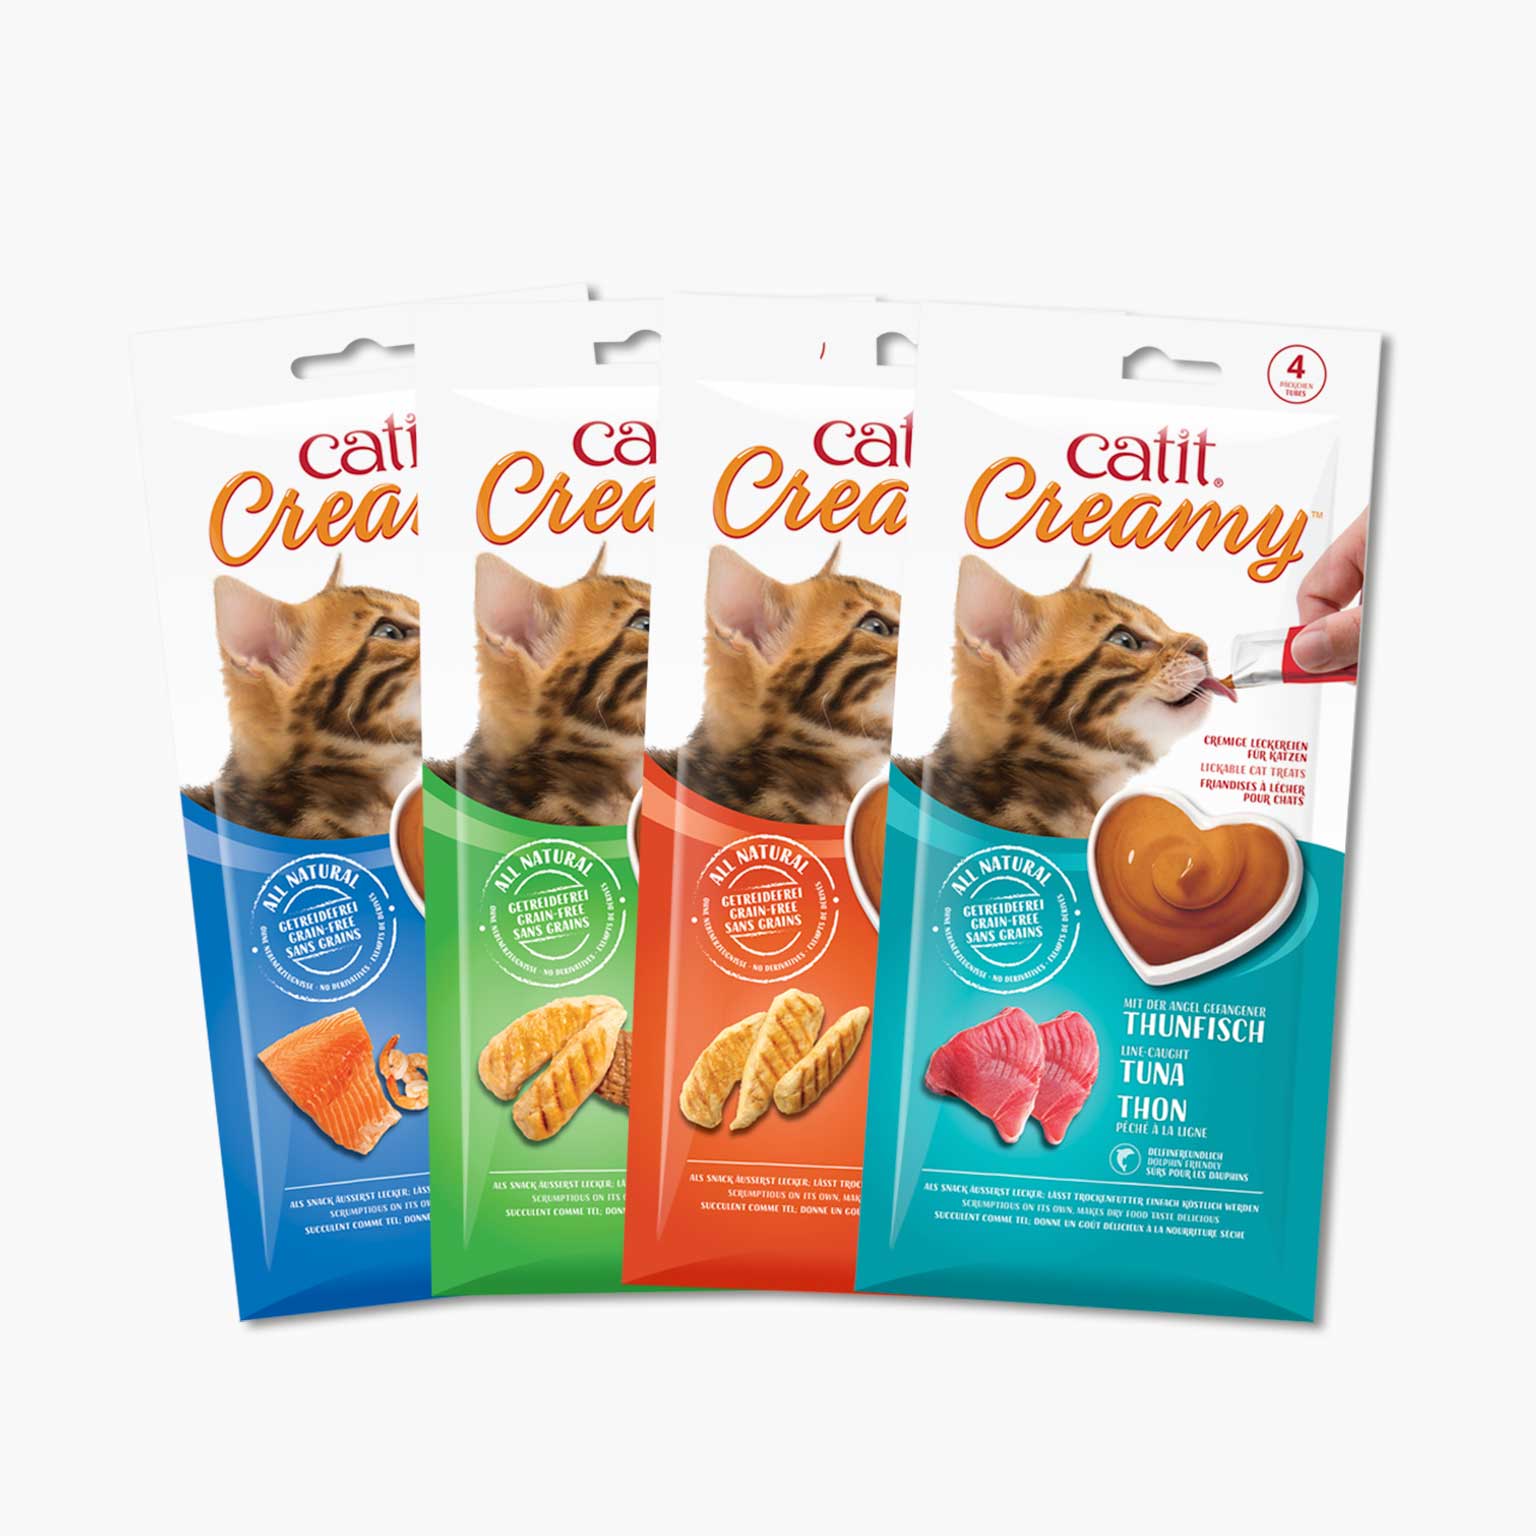 Catit Creamy 4 packs